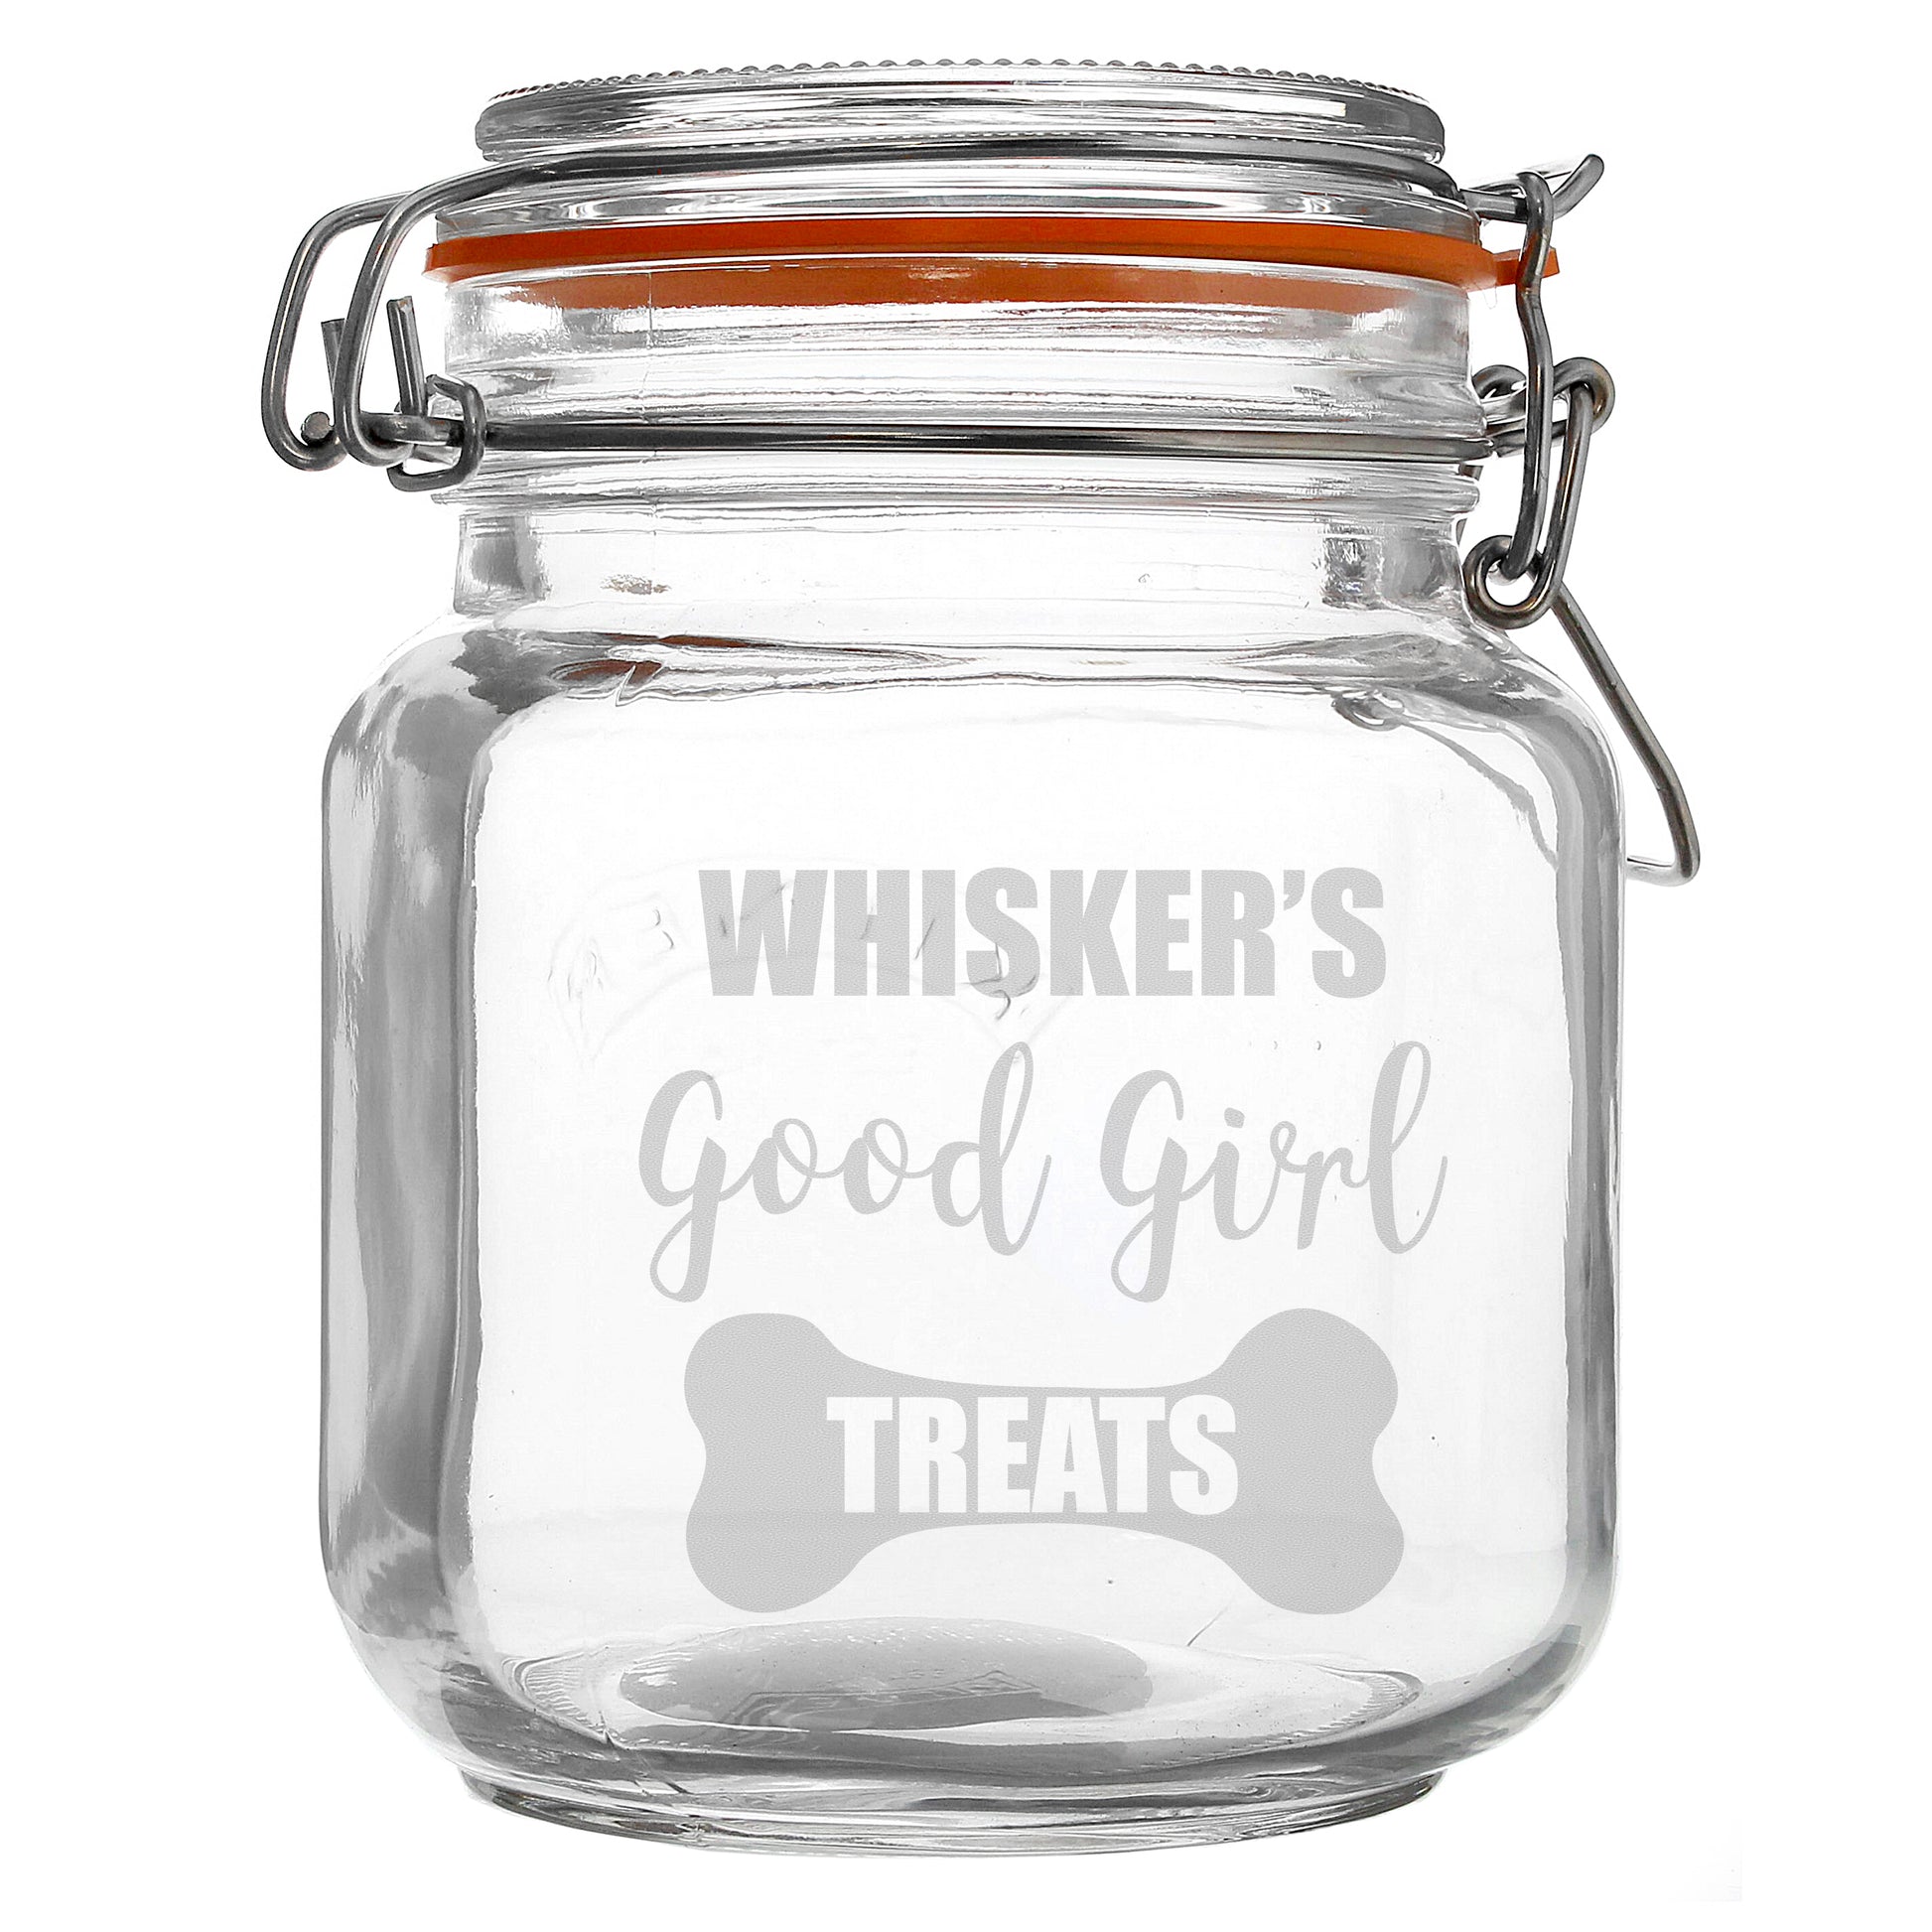 Good Girl treats glass kilner jar - Lilybet loves